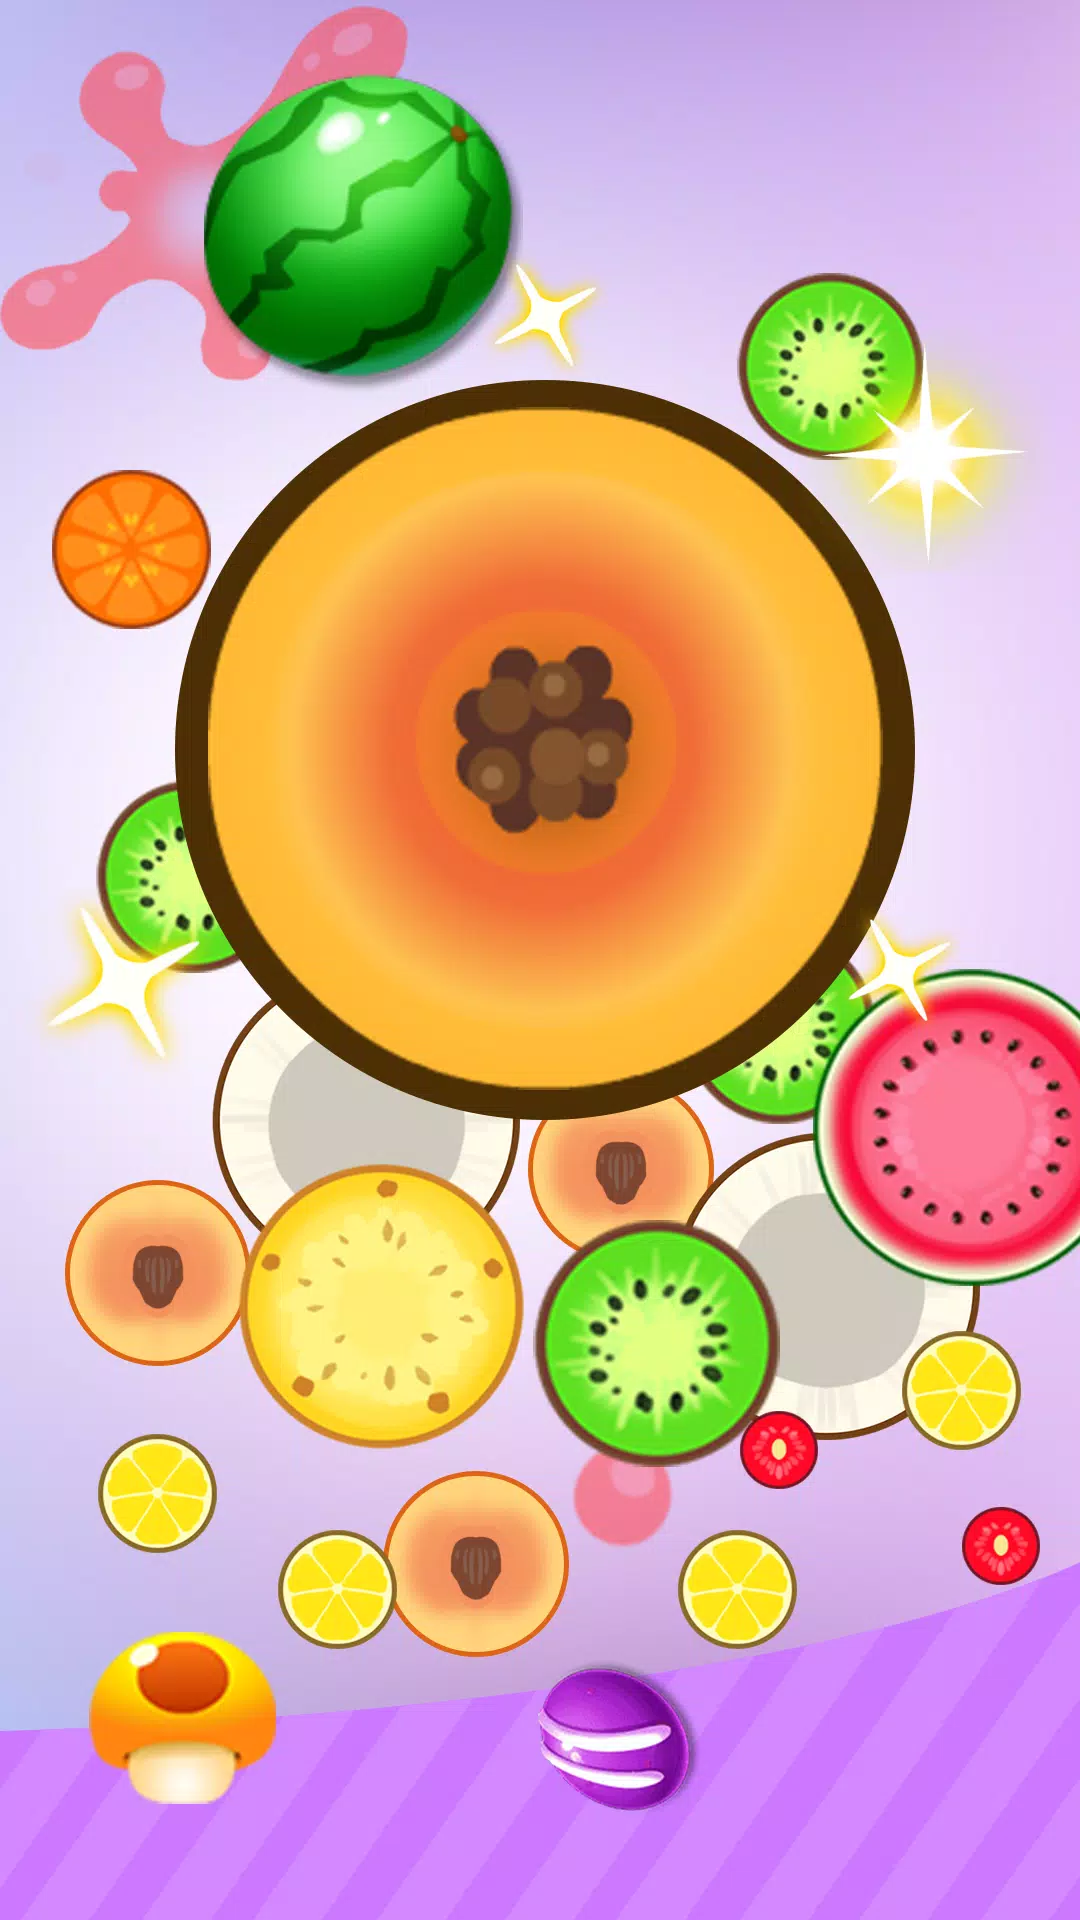 Crazy Fruit Crush - Juicy Fruit Match 3 Game  (com.LightHusky.CrazyFruitCrush) APK